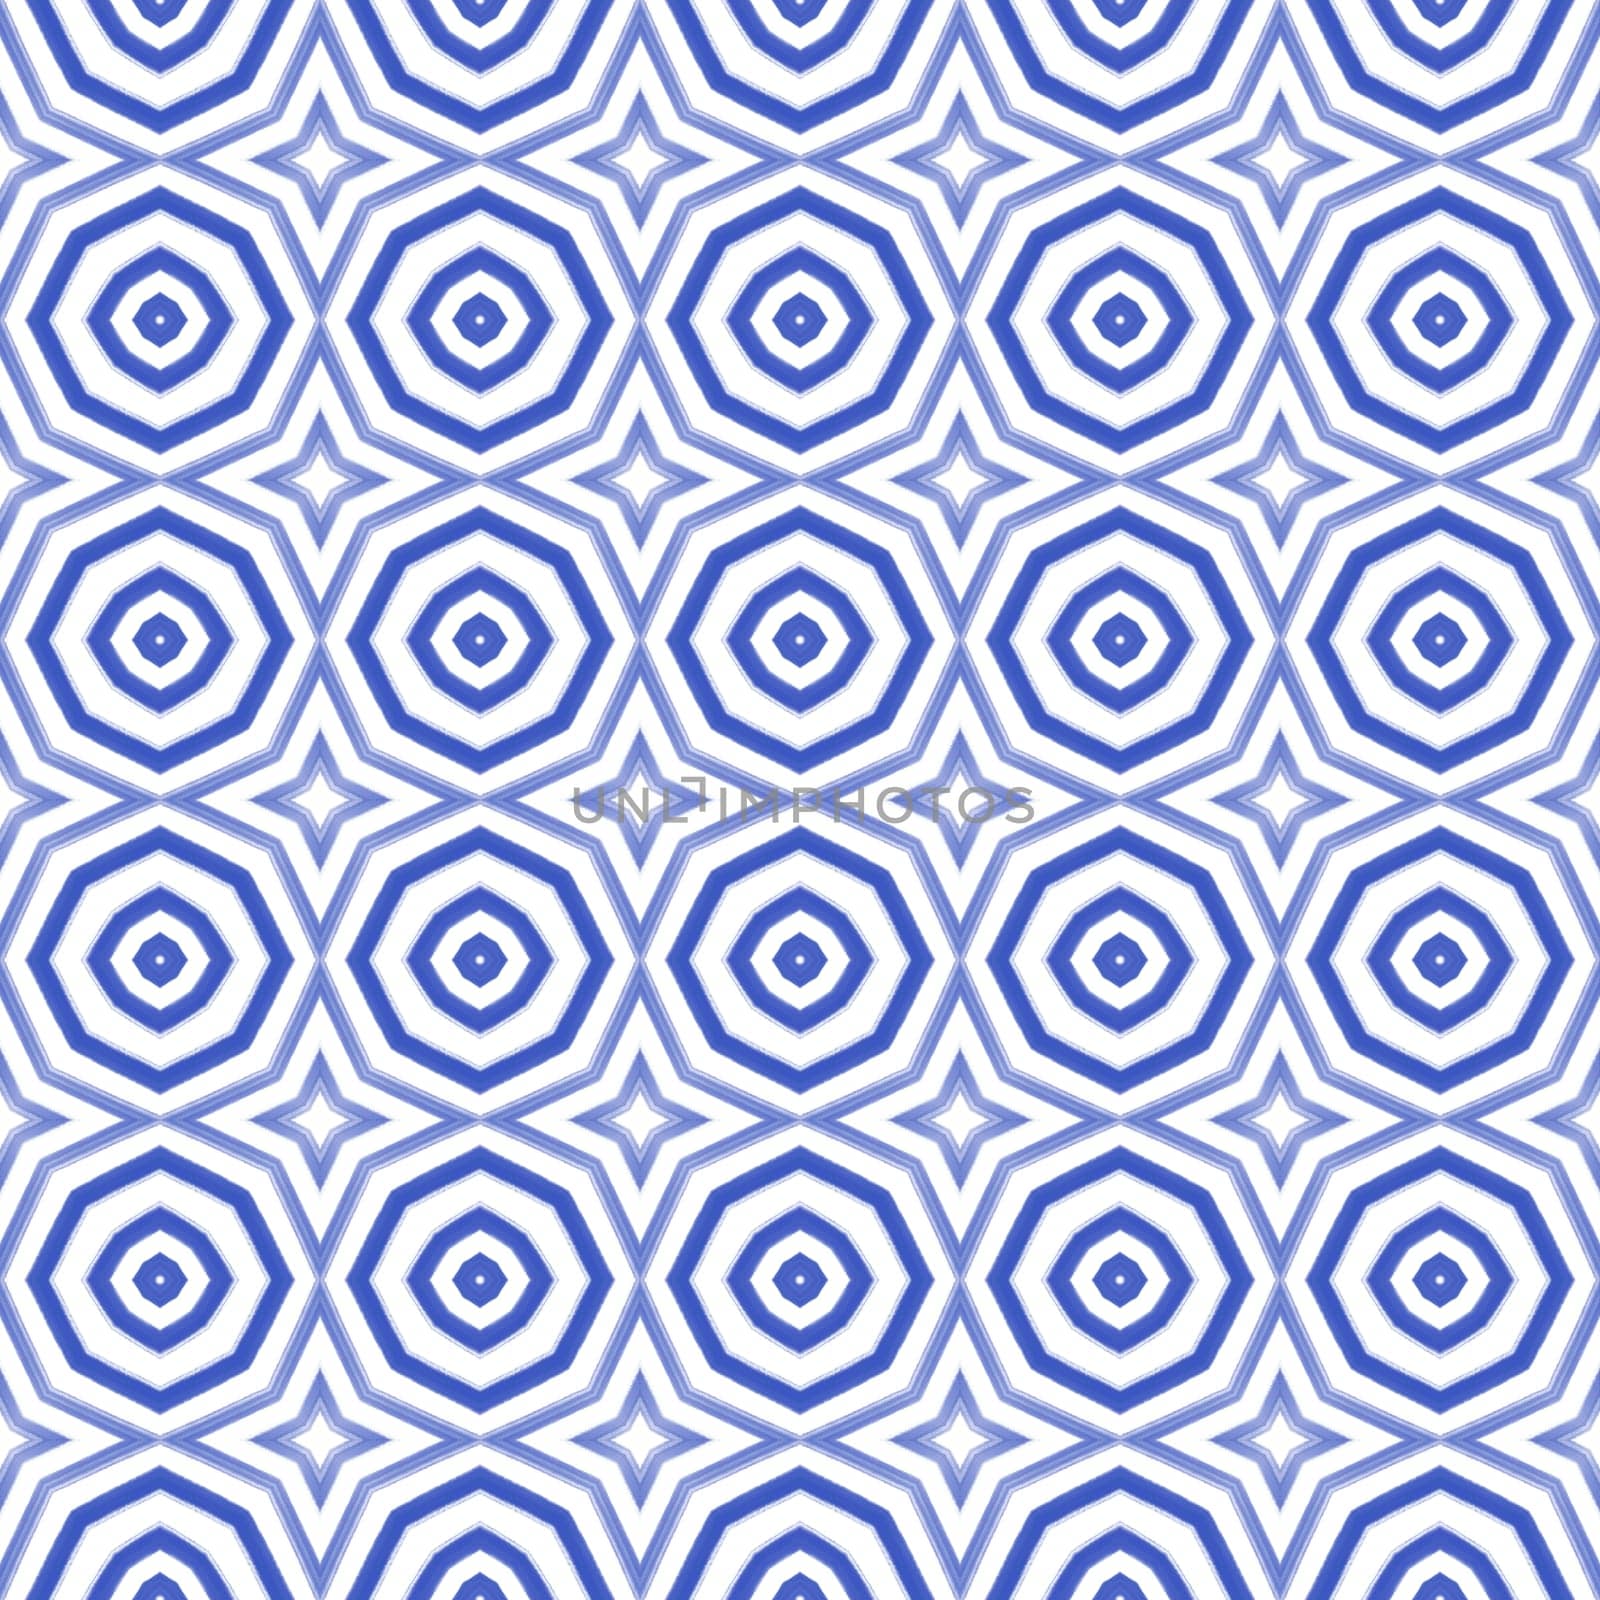 Tiled watercolor pattern. Indigo symmetrical by beginagain